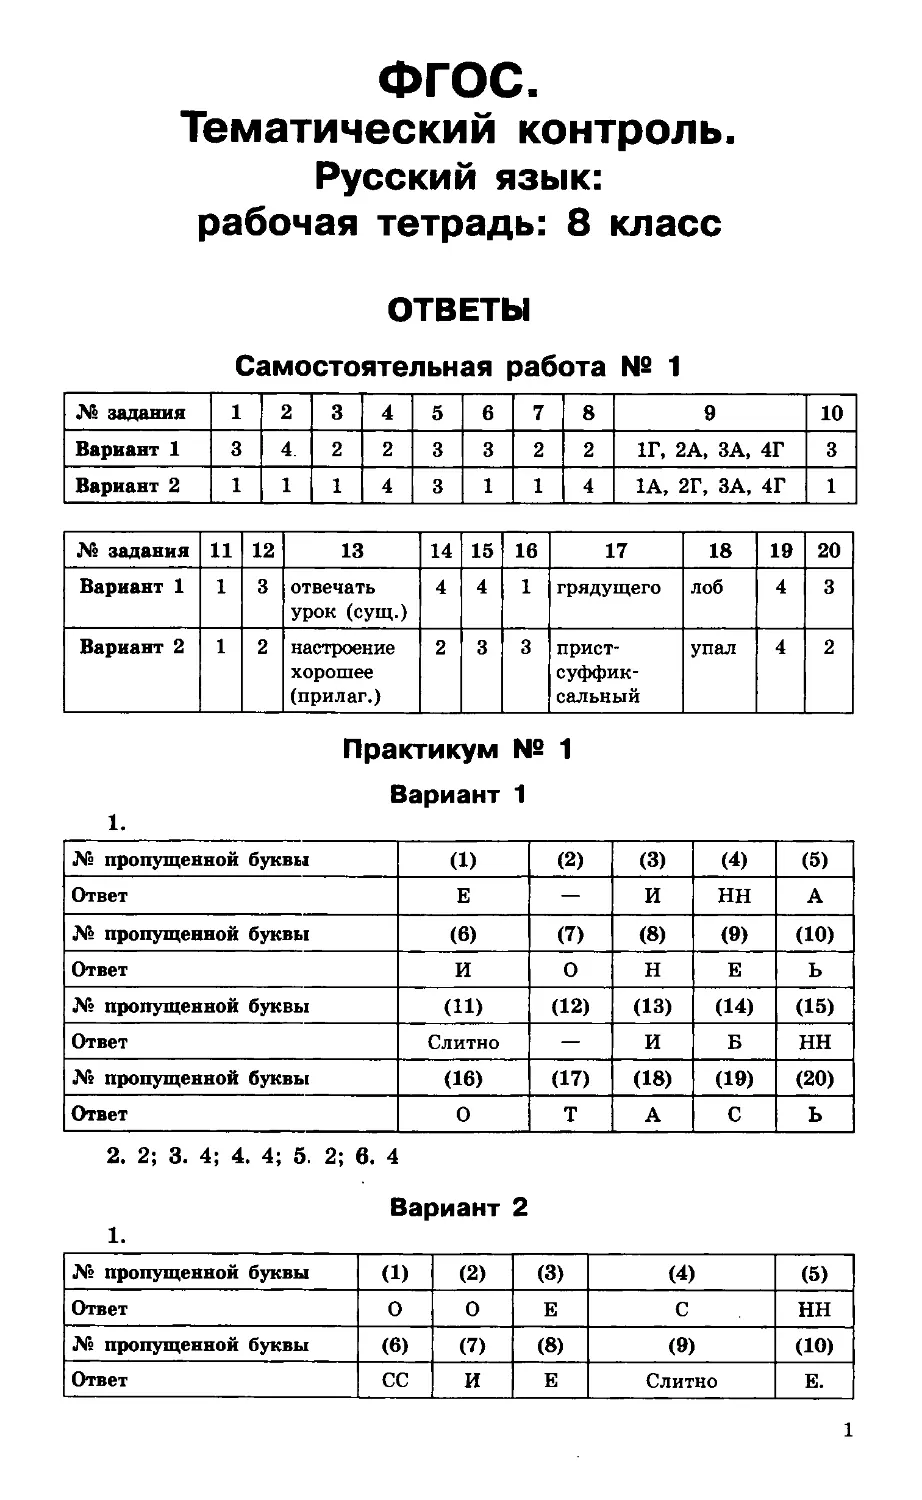 Тест 8 русский 9 класс